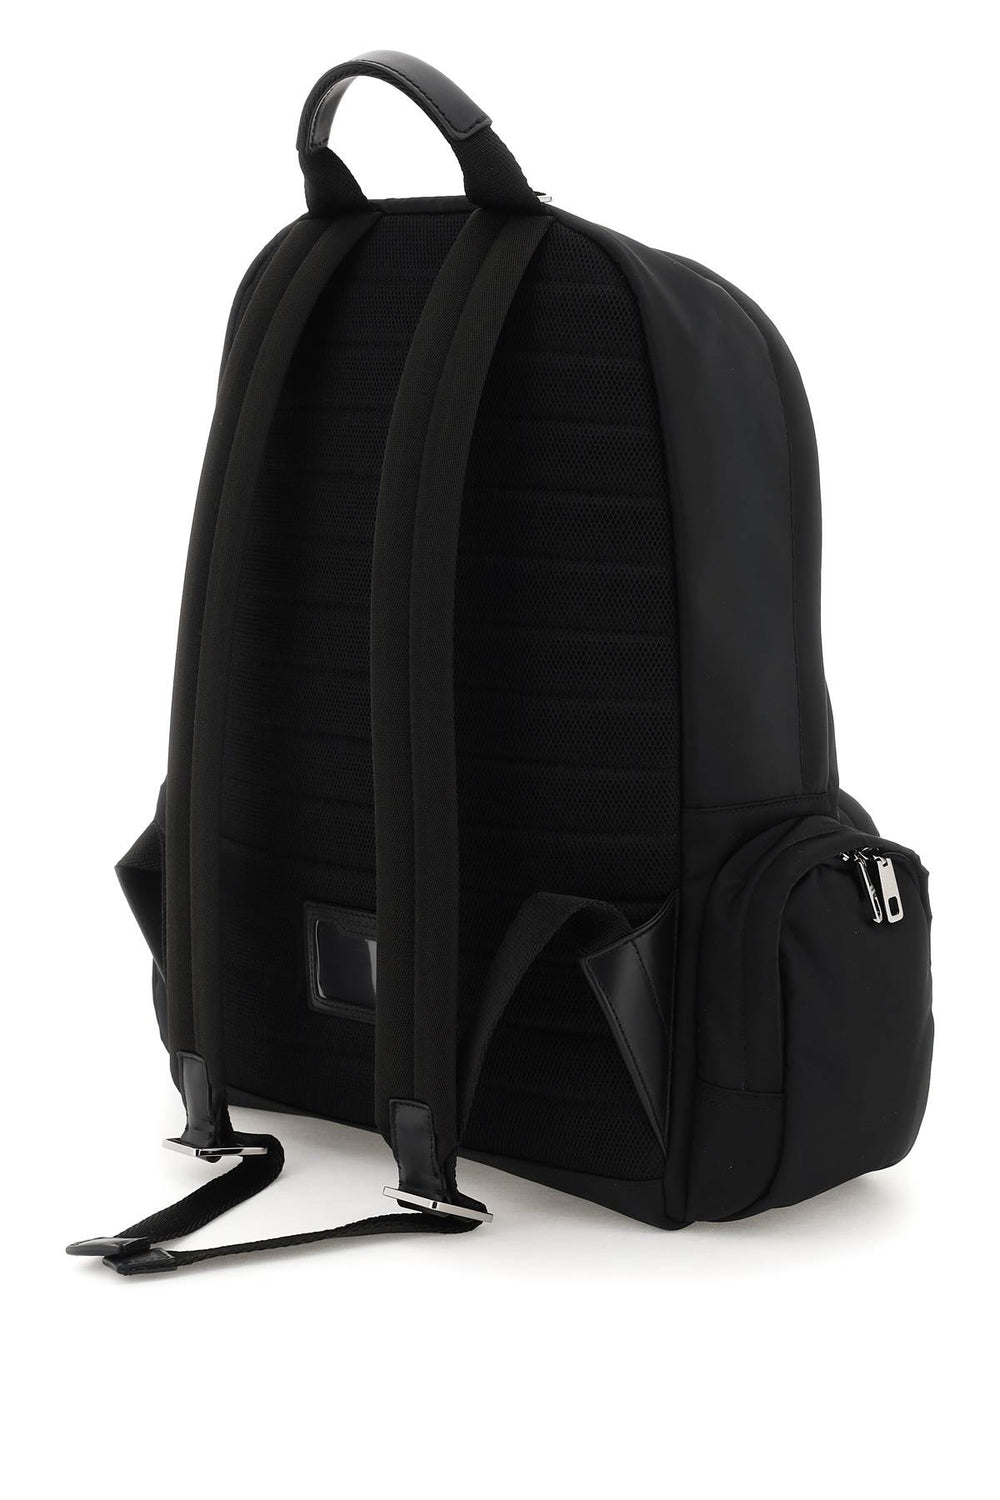 Dolce & gabbana nylon backpack with logo-1